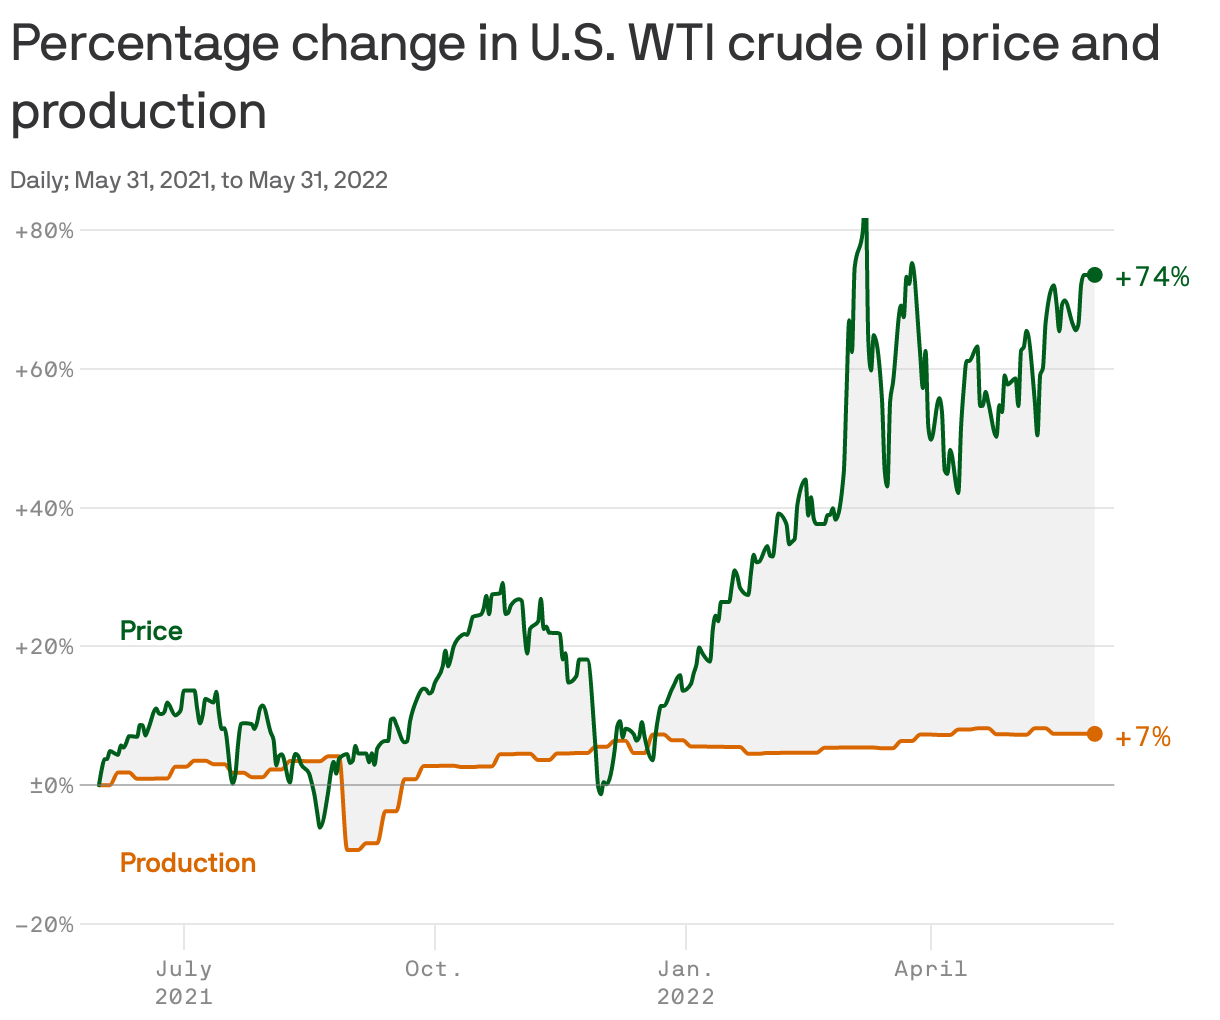 Percentage change in U.S. WTI crude oil price and production